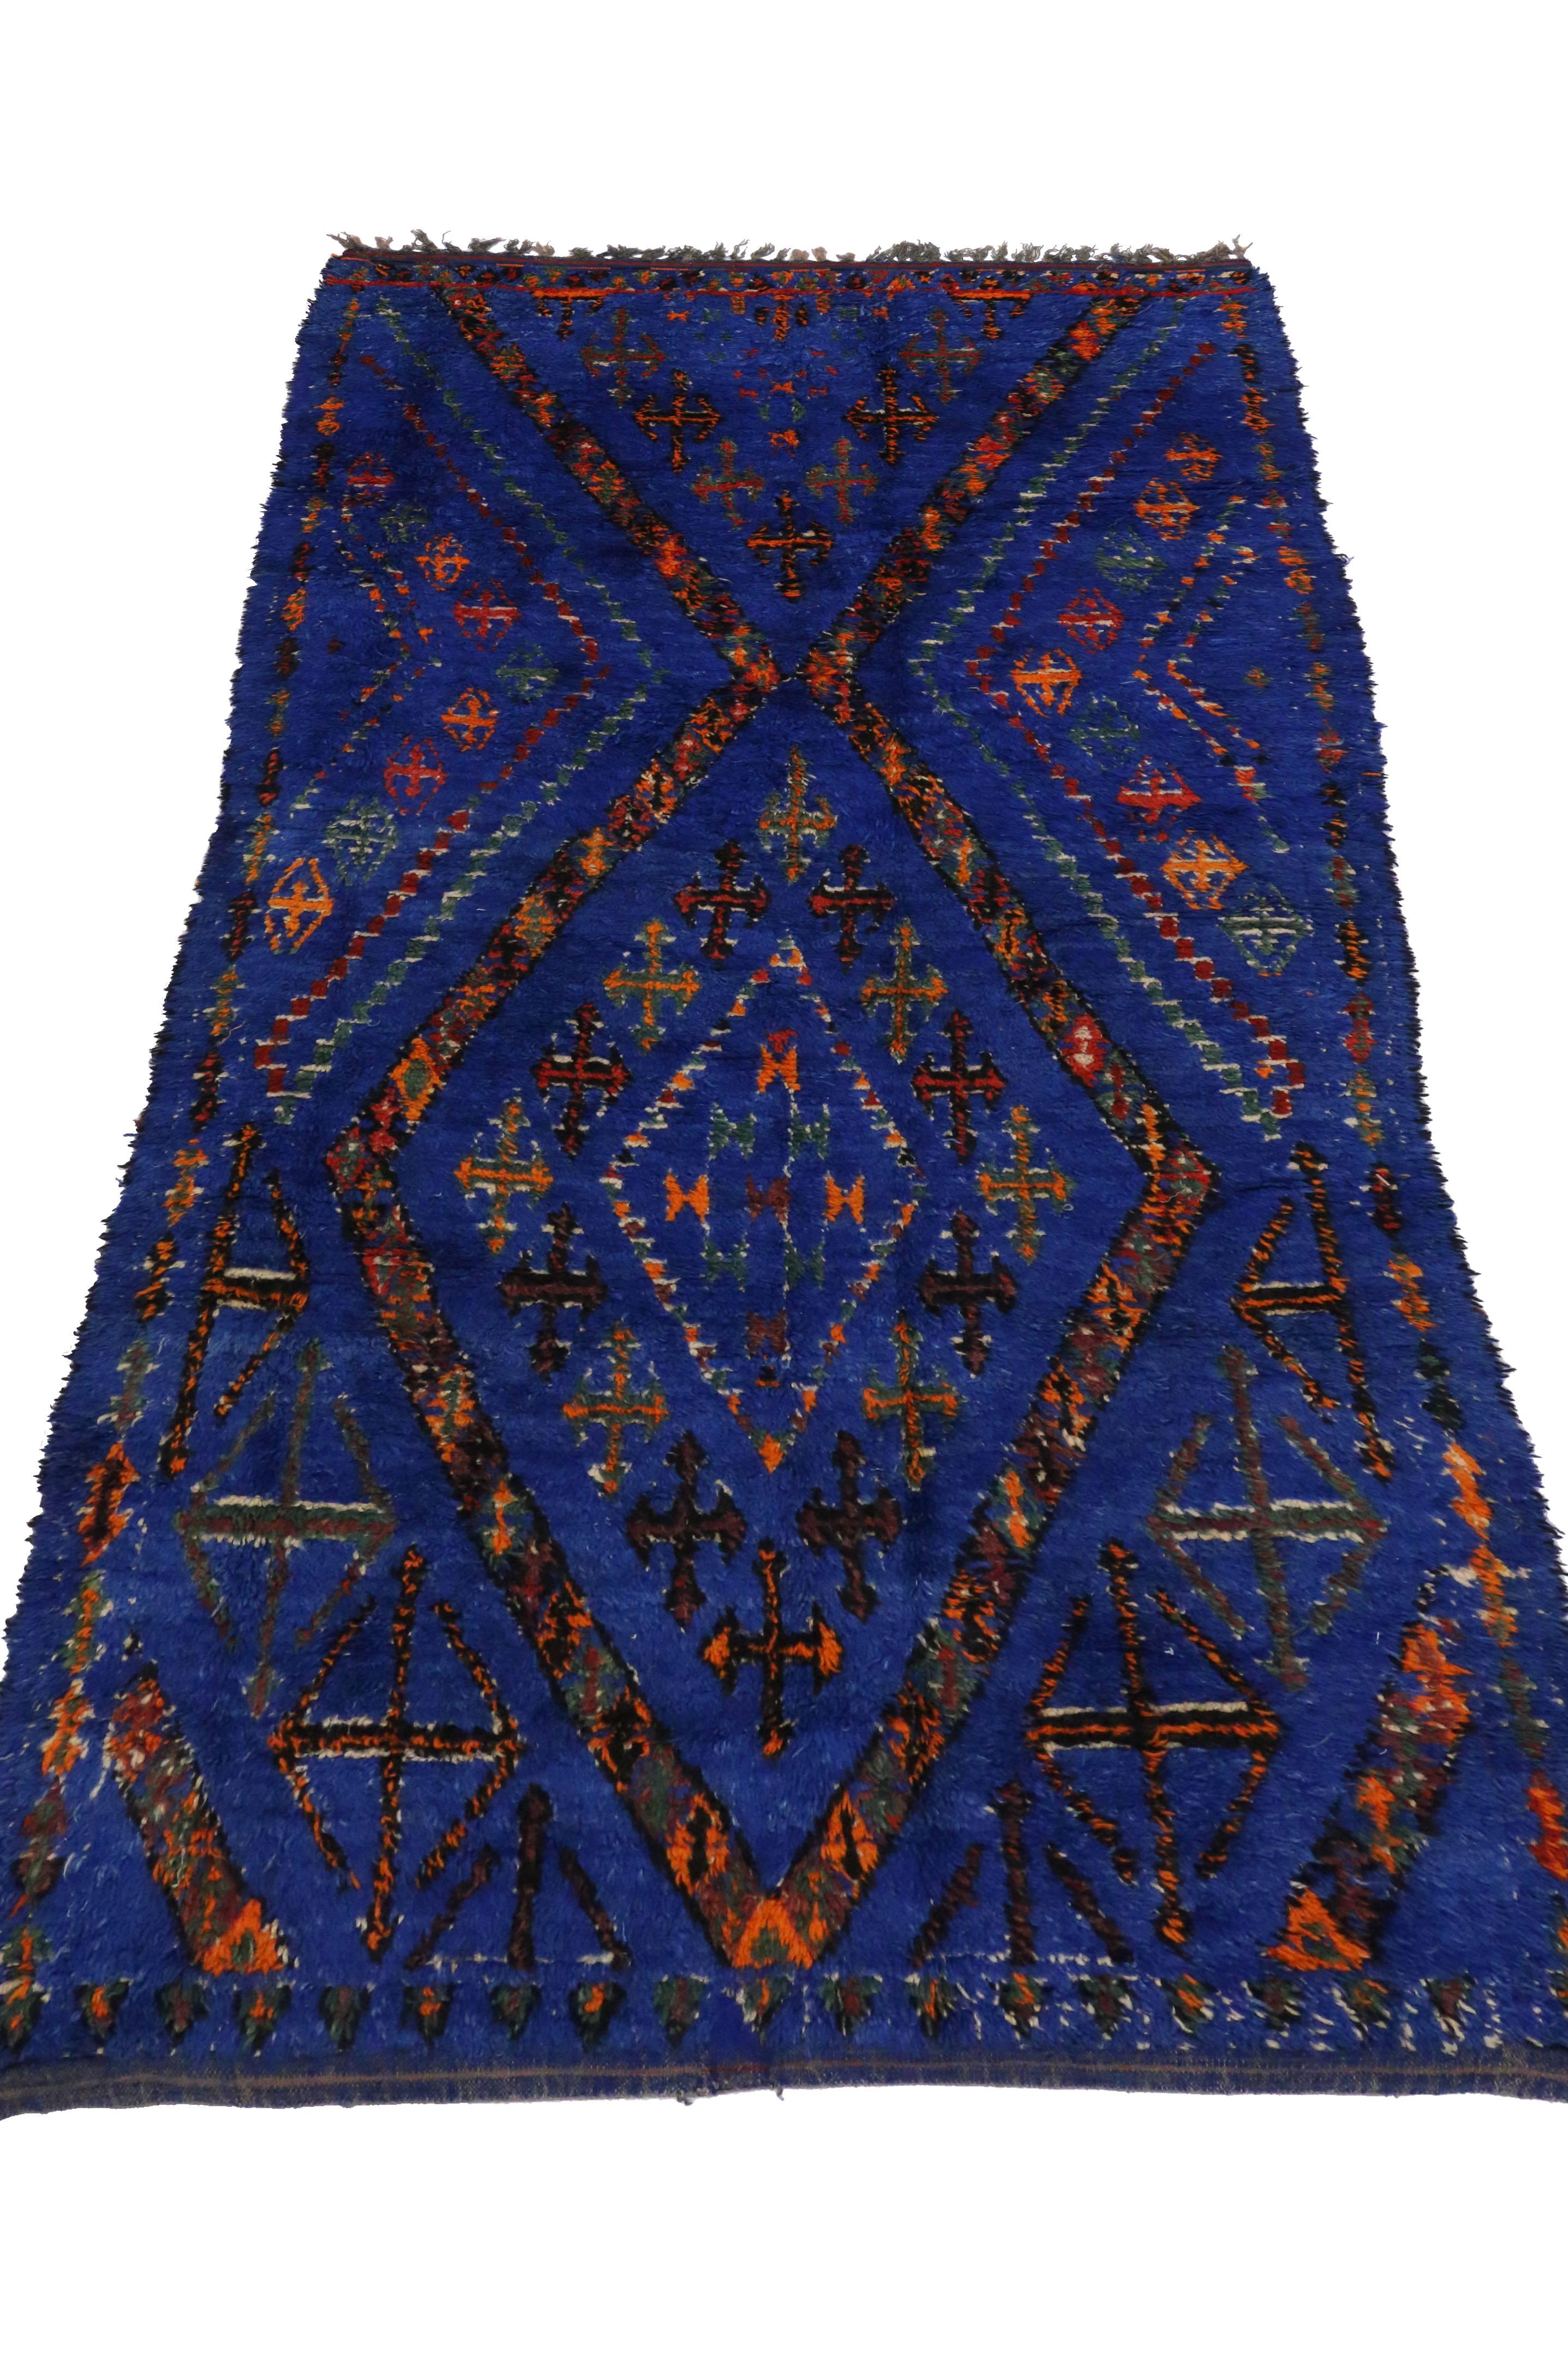 20th Century Vintage Berber Moroccan Rug with Tribal Style, Blue Indigo Beni Mguild Carpet